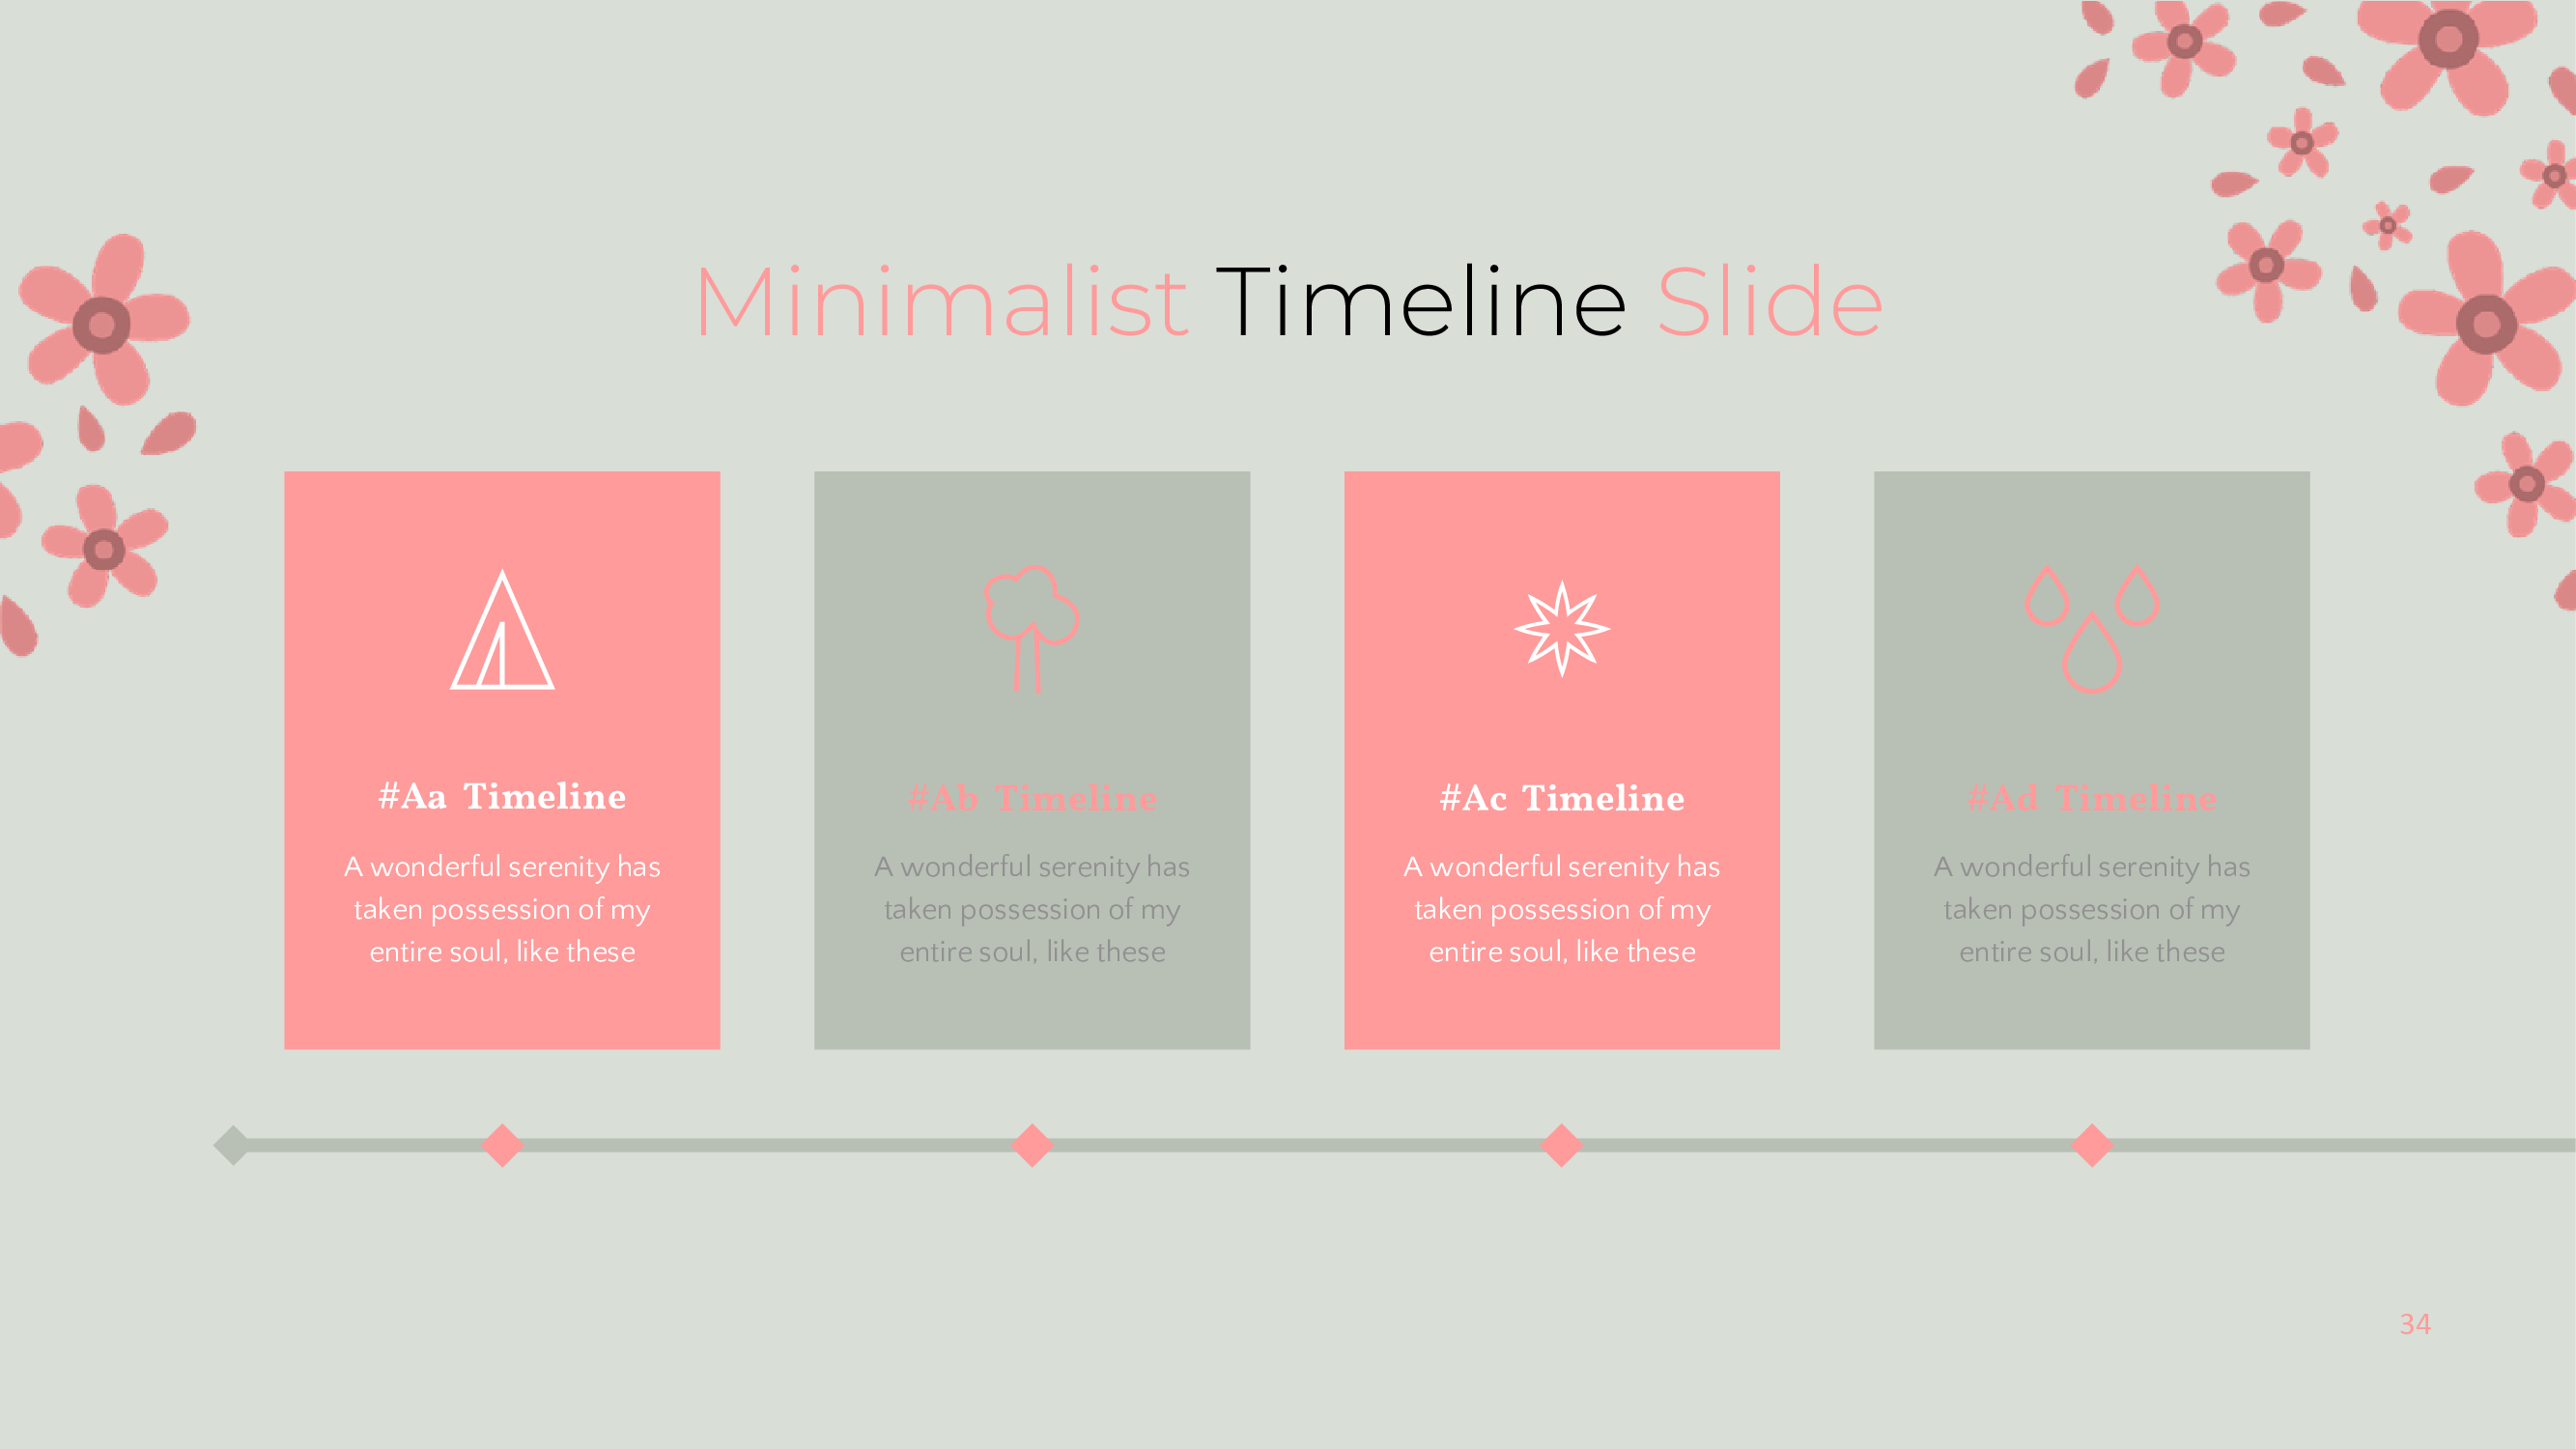 Timeline slide in minimalistic style.